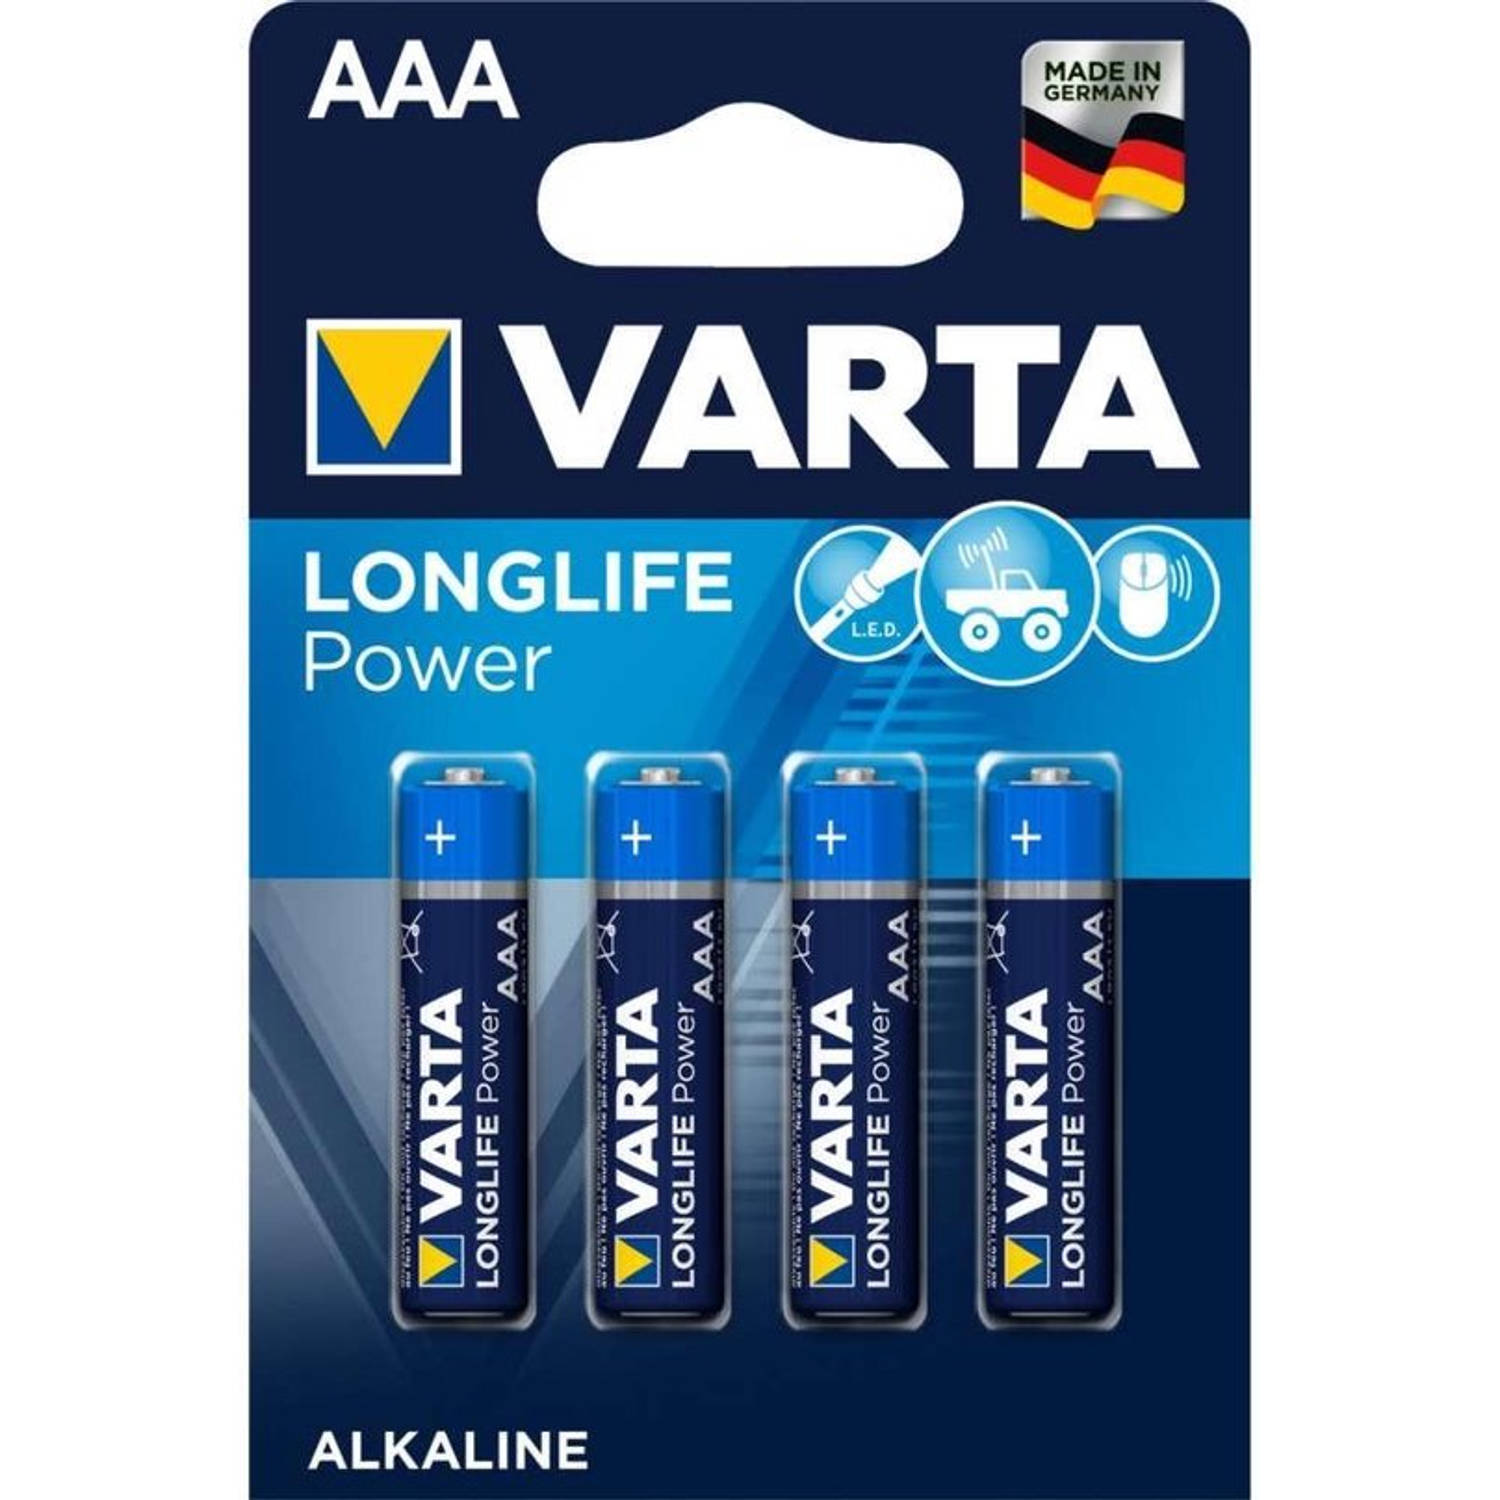 Varta Longlife Power 4x AAA Alkaline